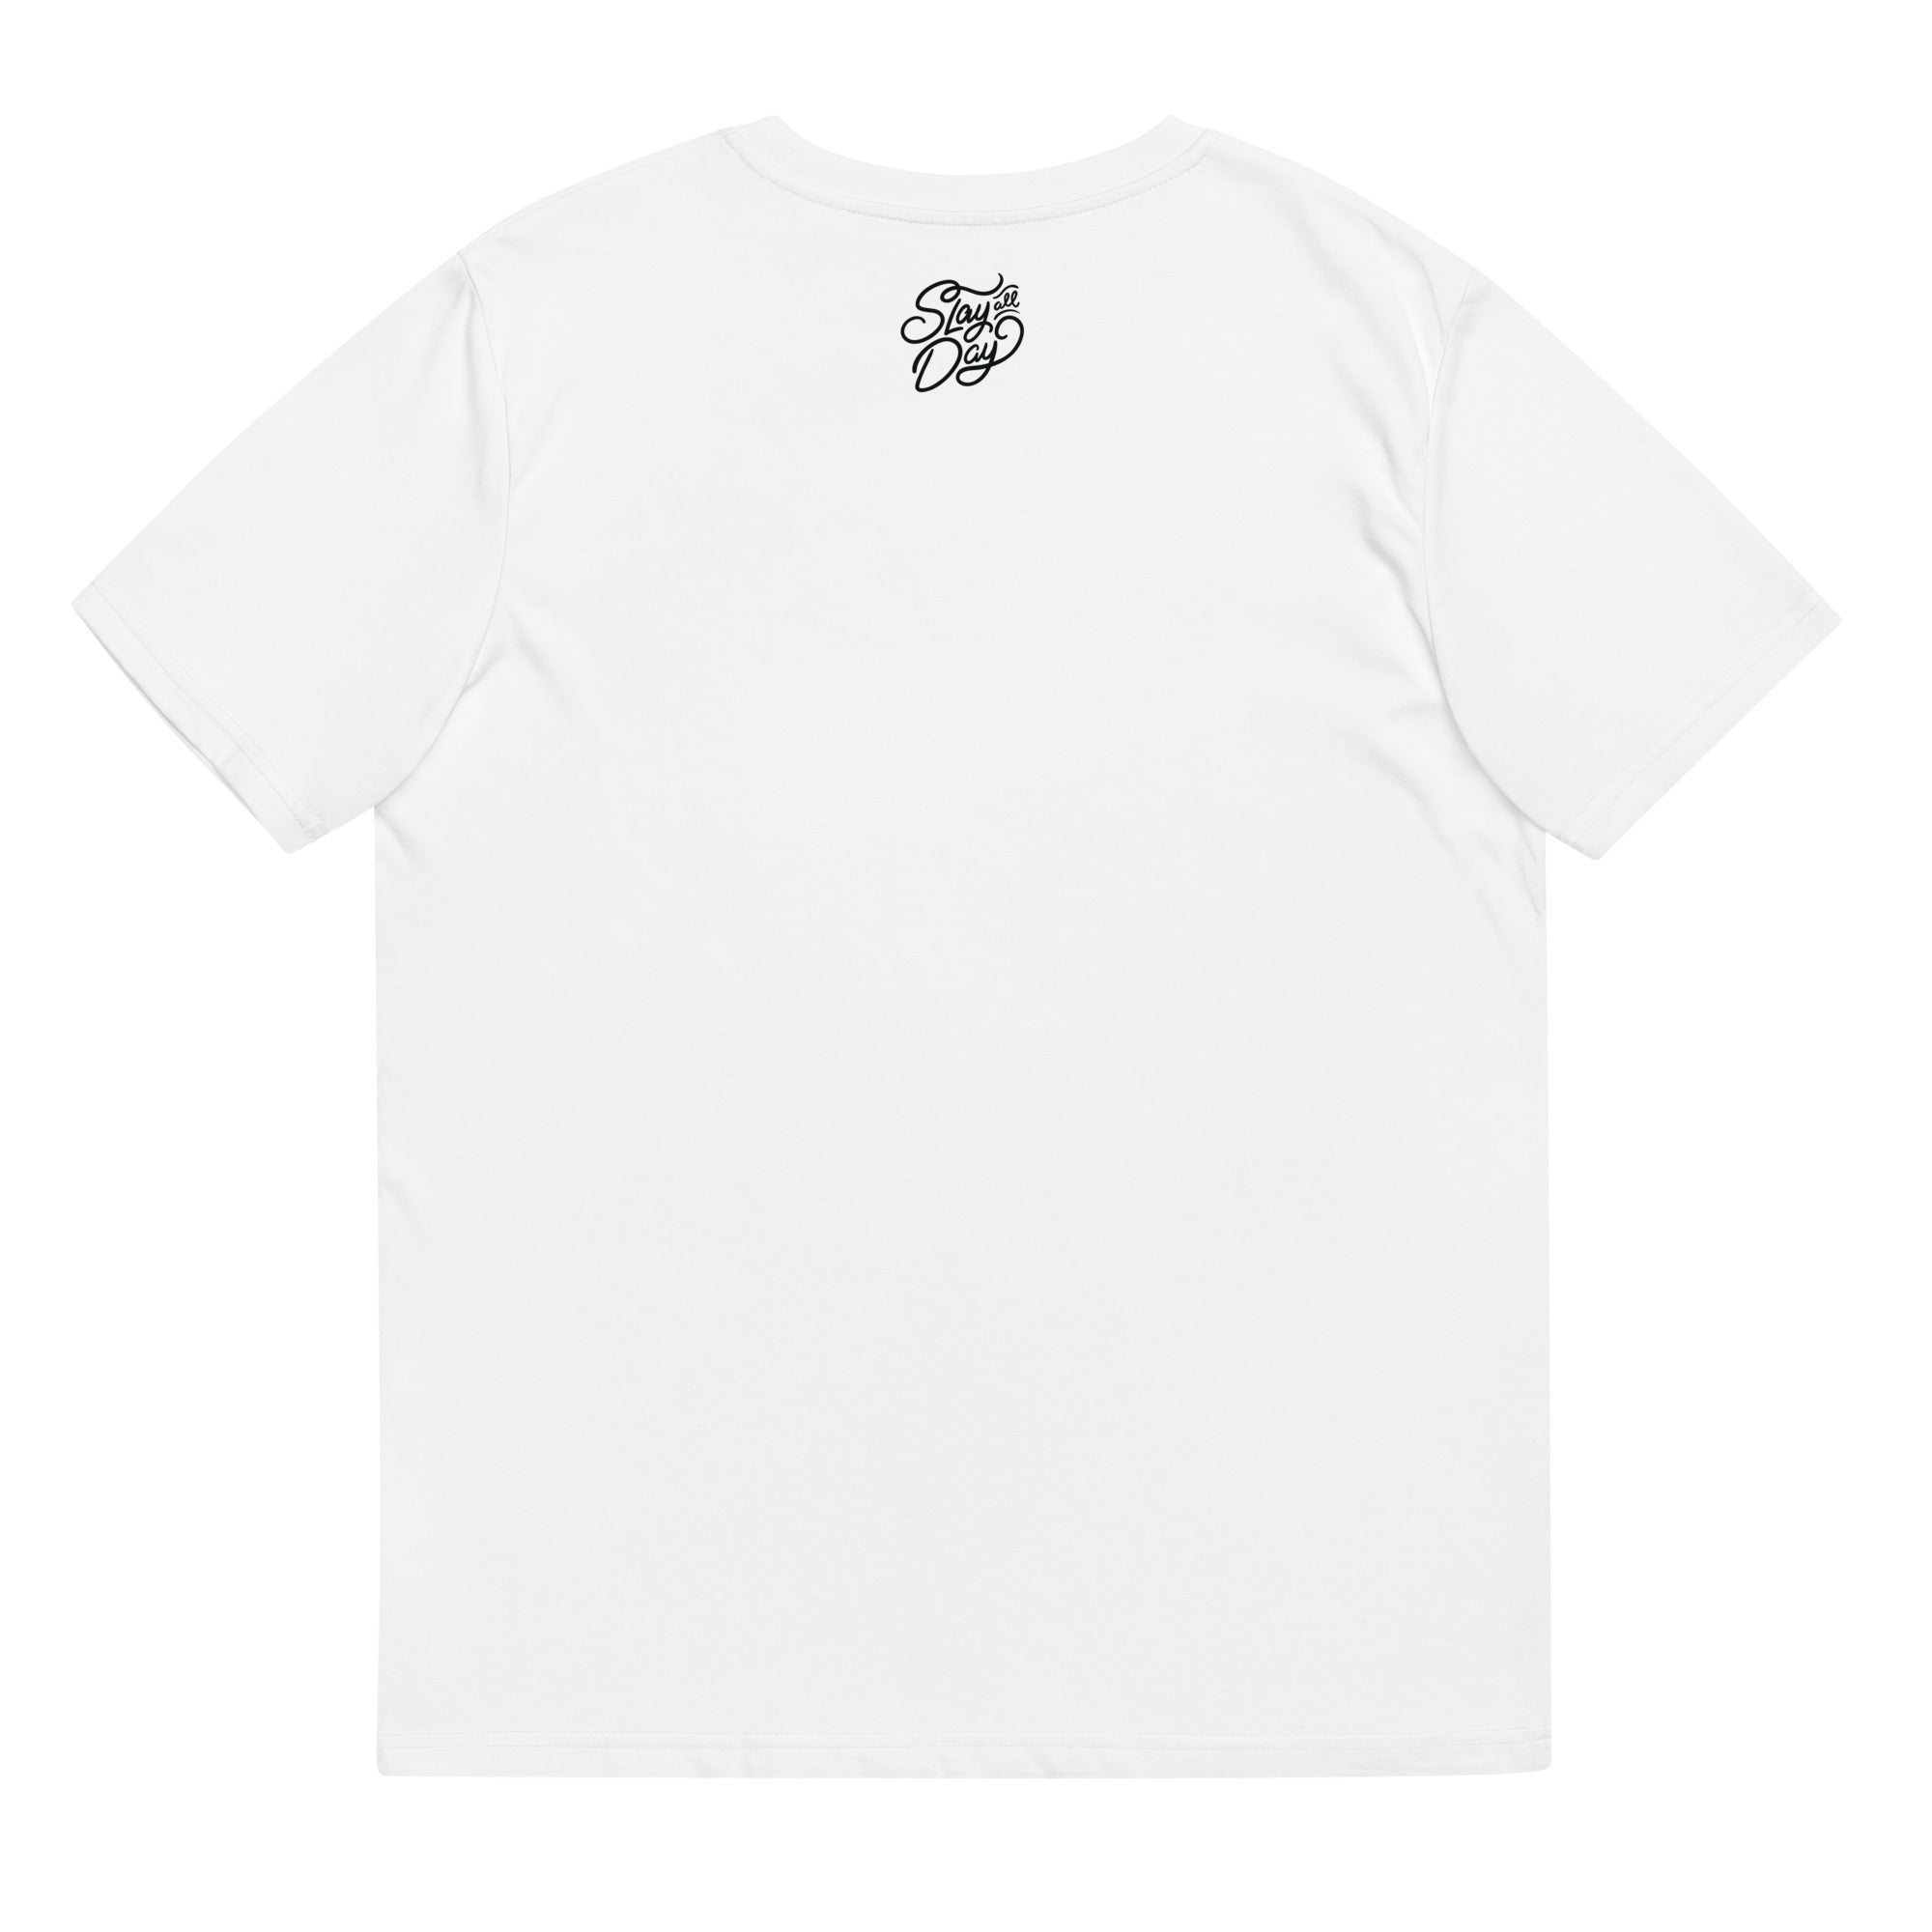 MF DOOM - Embroidery T-shirt